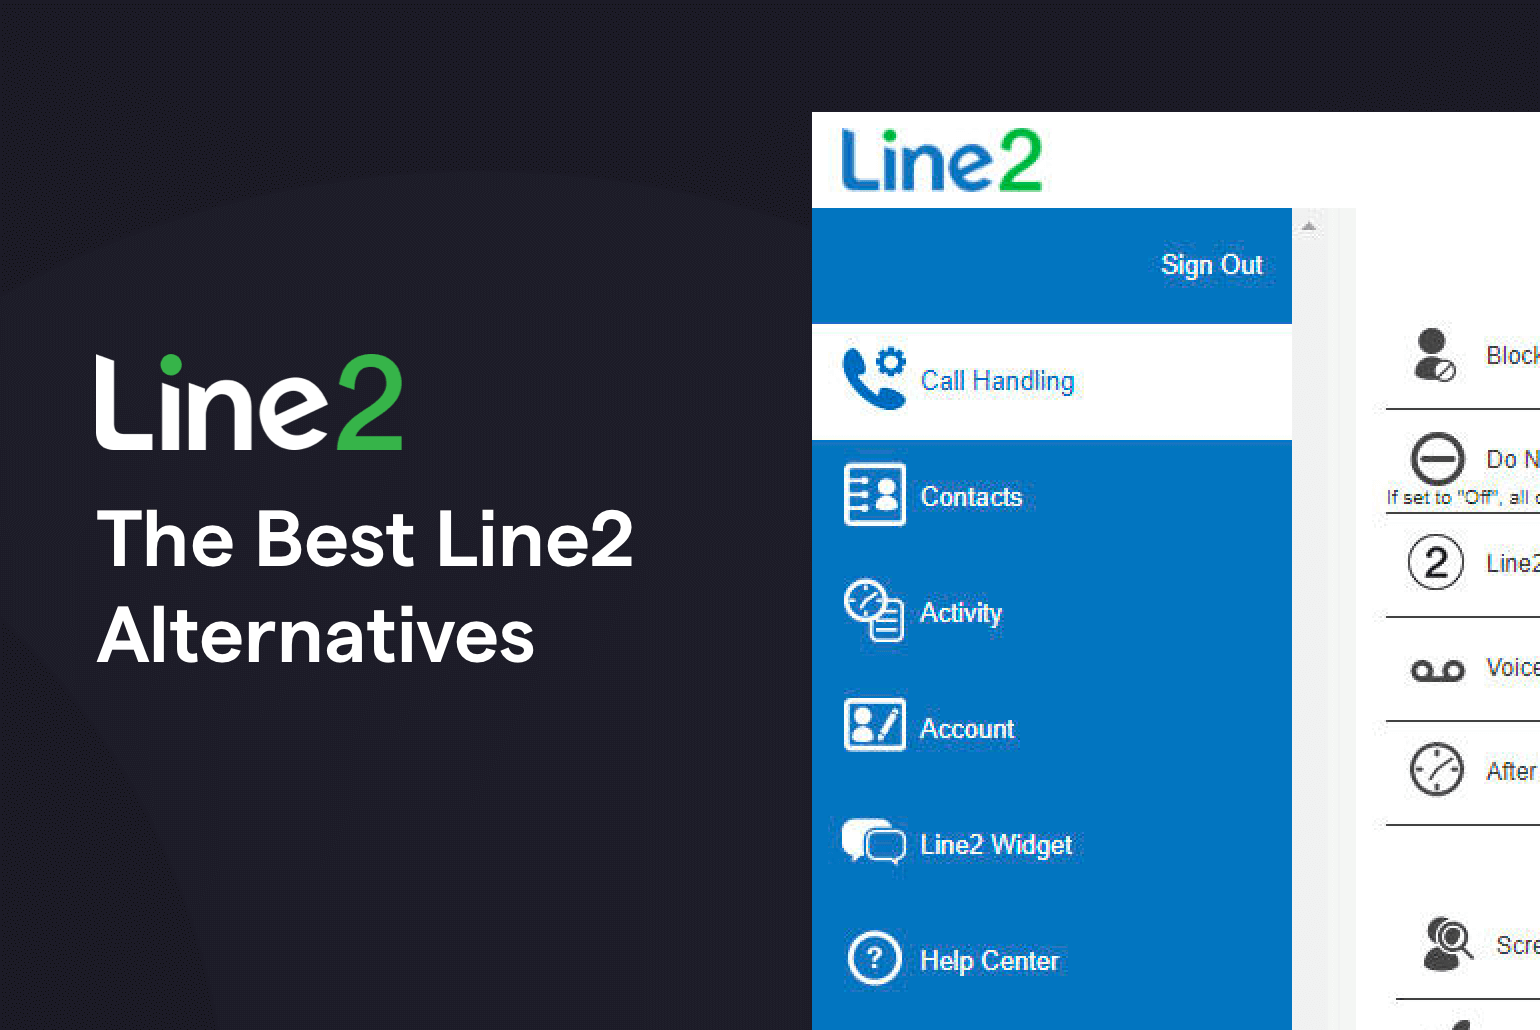 Line2 alternatives